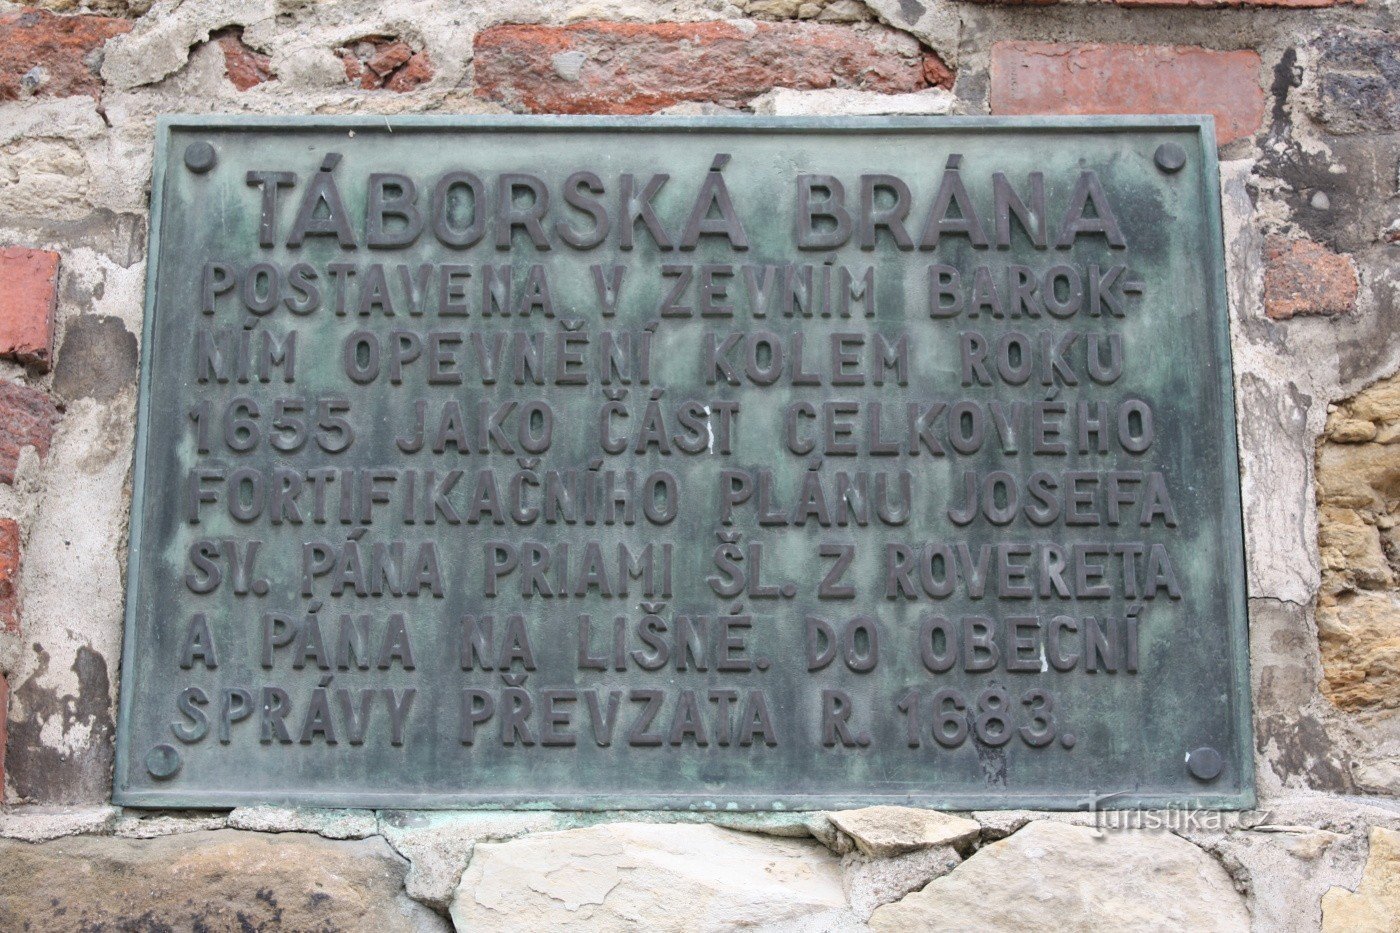 Prága – Táborská brána at Vyšehrad